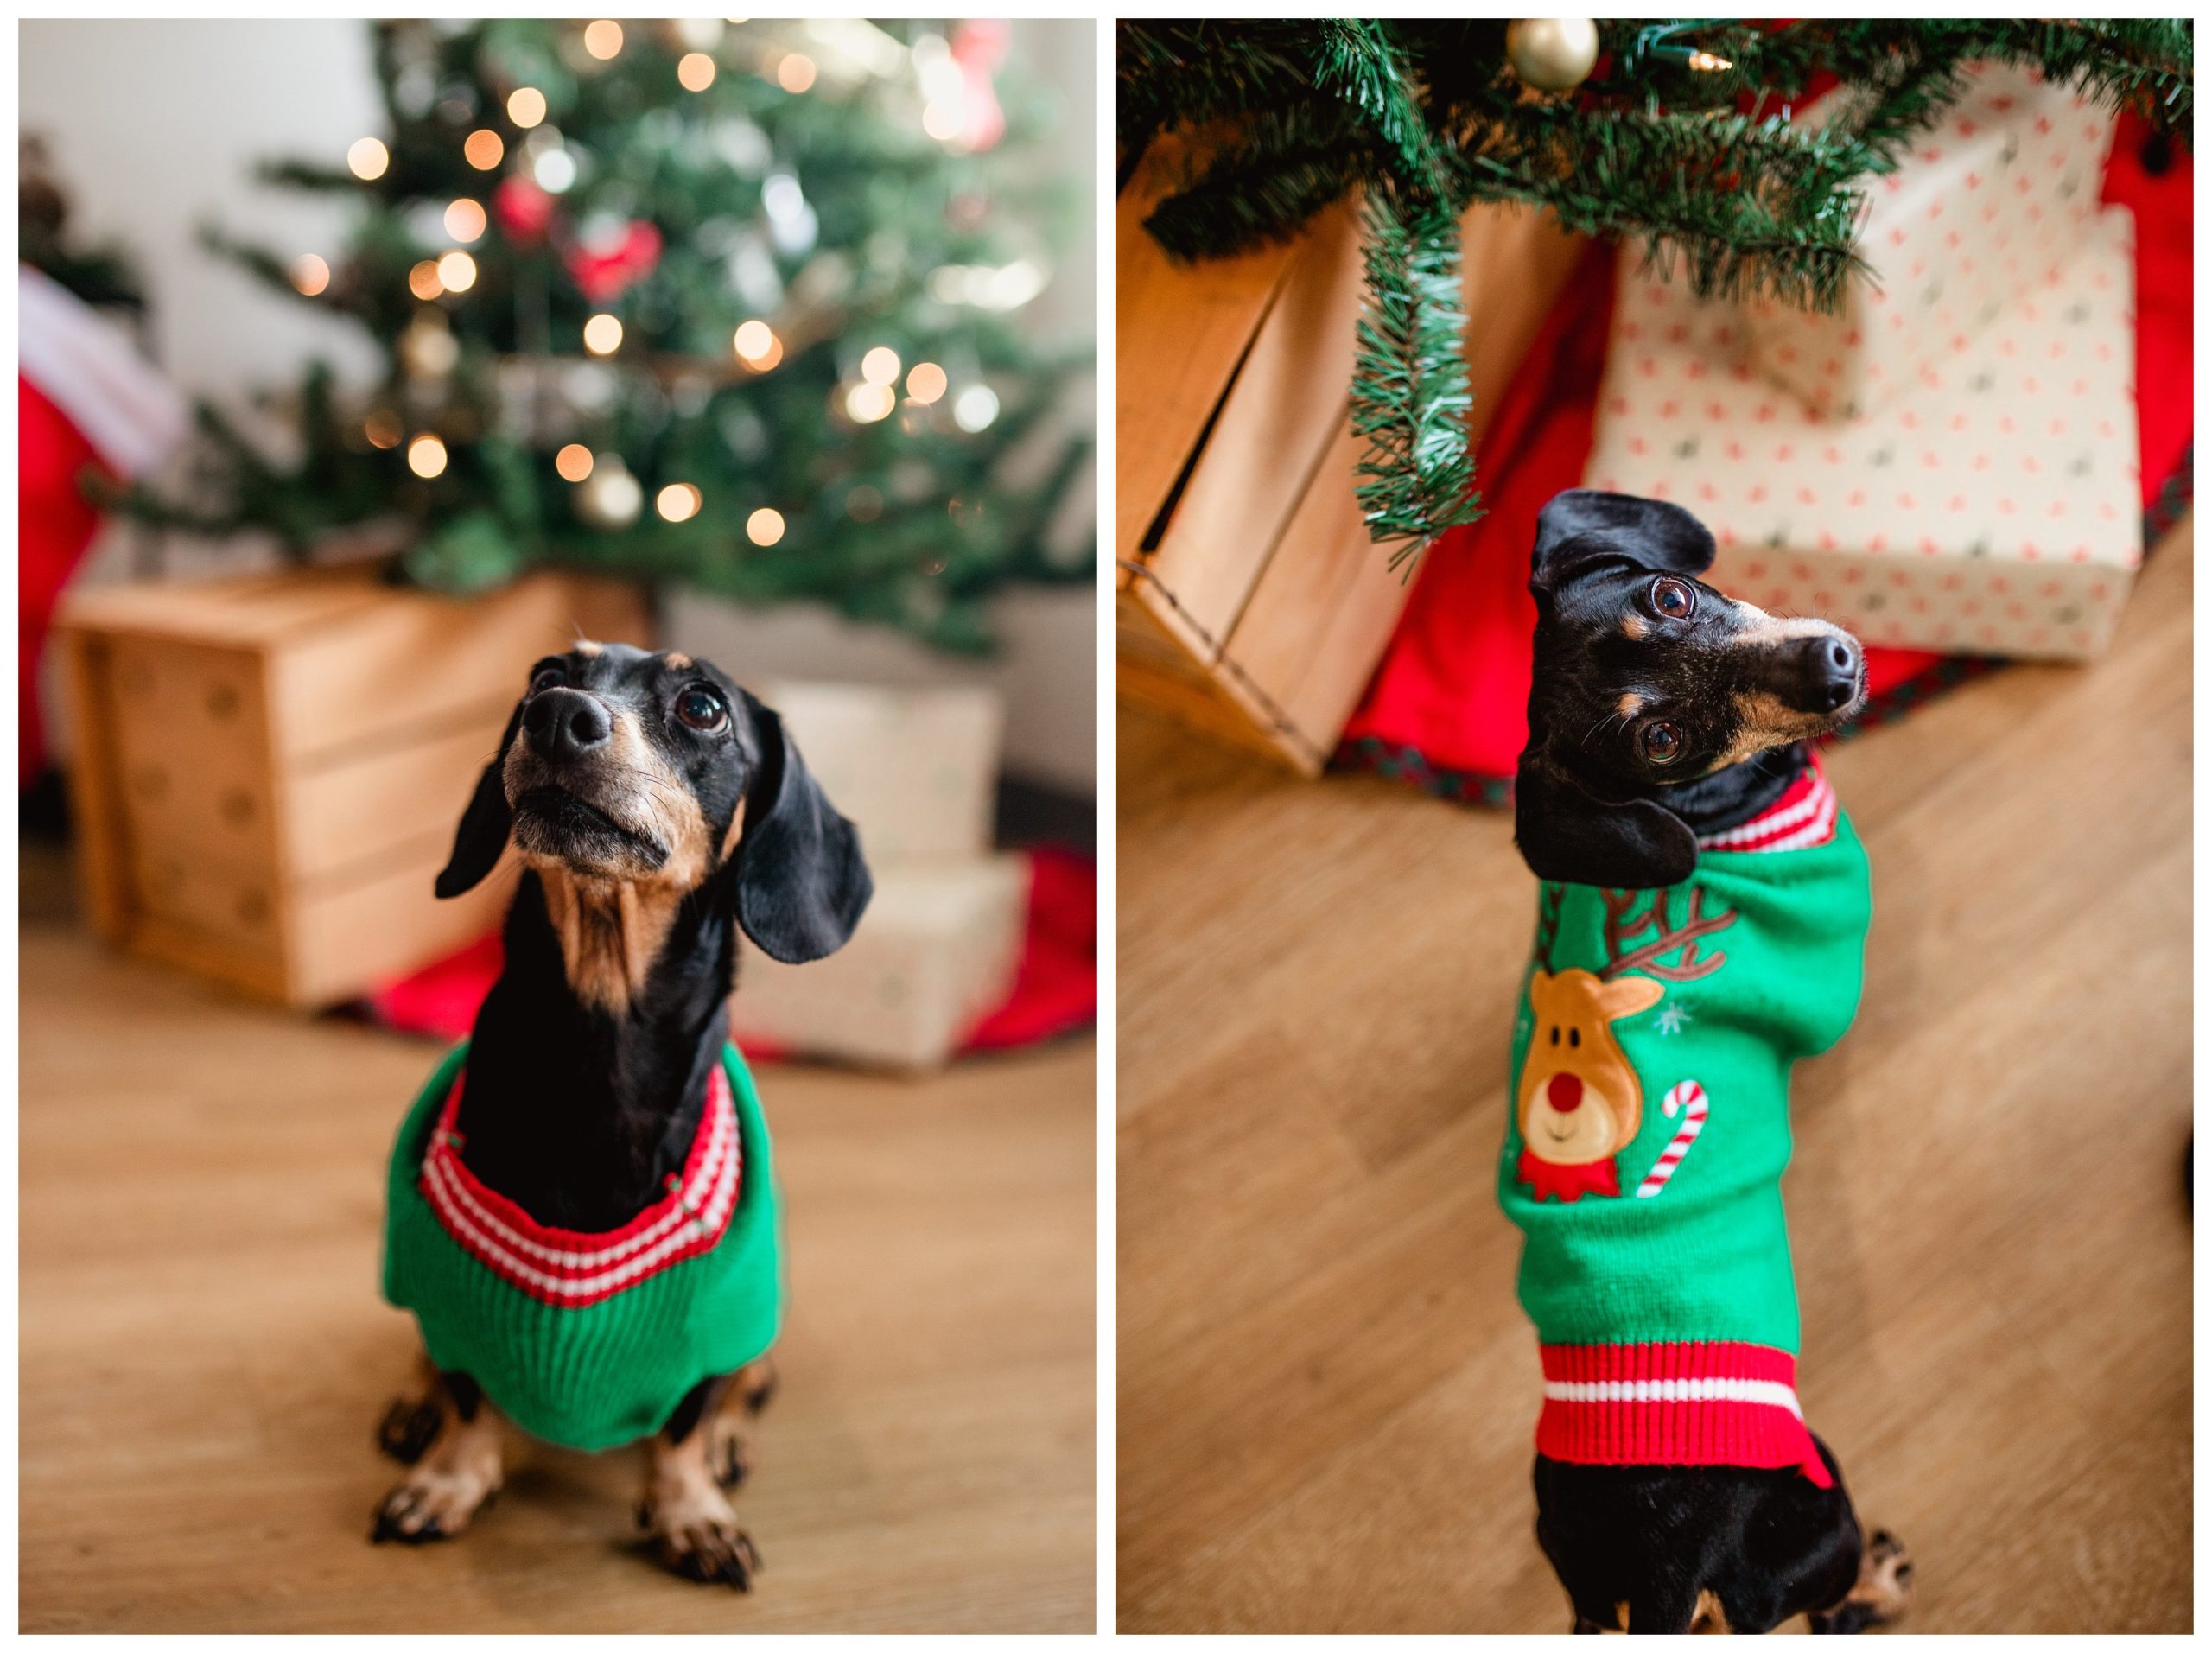 Cute dog christmas sweater photoshoot with Christmas tree